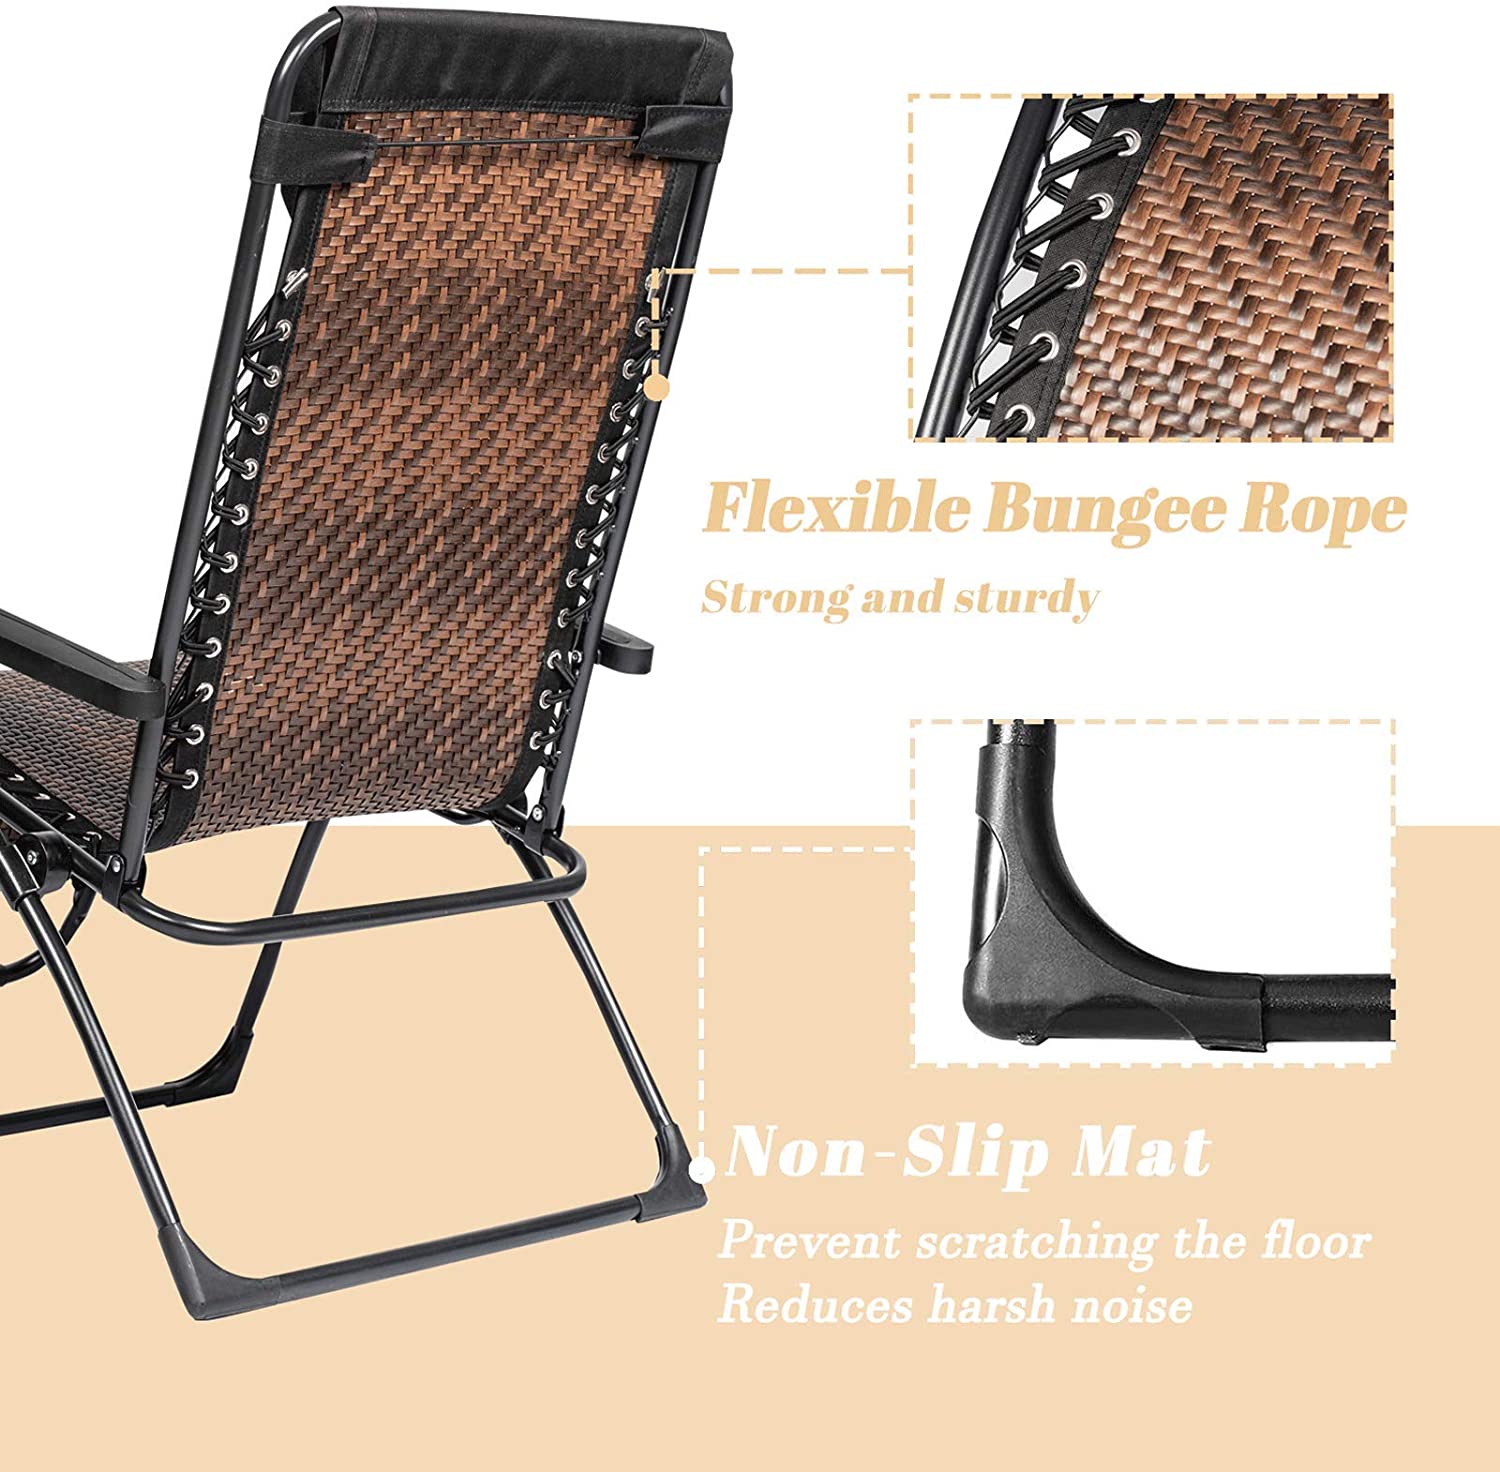 SOLAURA Outdoor Zero Gravity Lounge Chair Patio Adjustable Folding Wicker Recliner - Brown - image 5 of 6